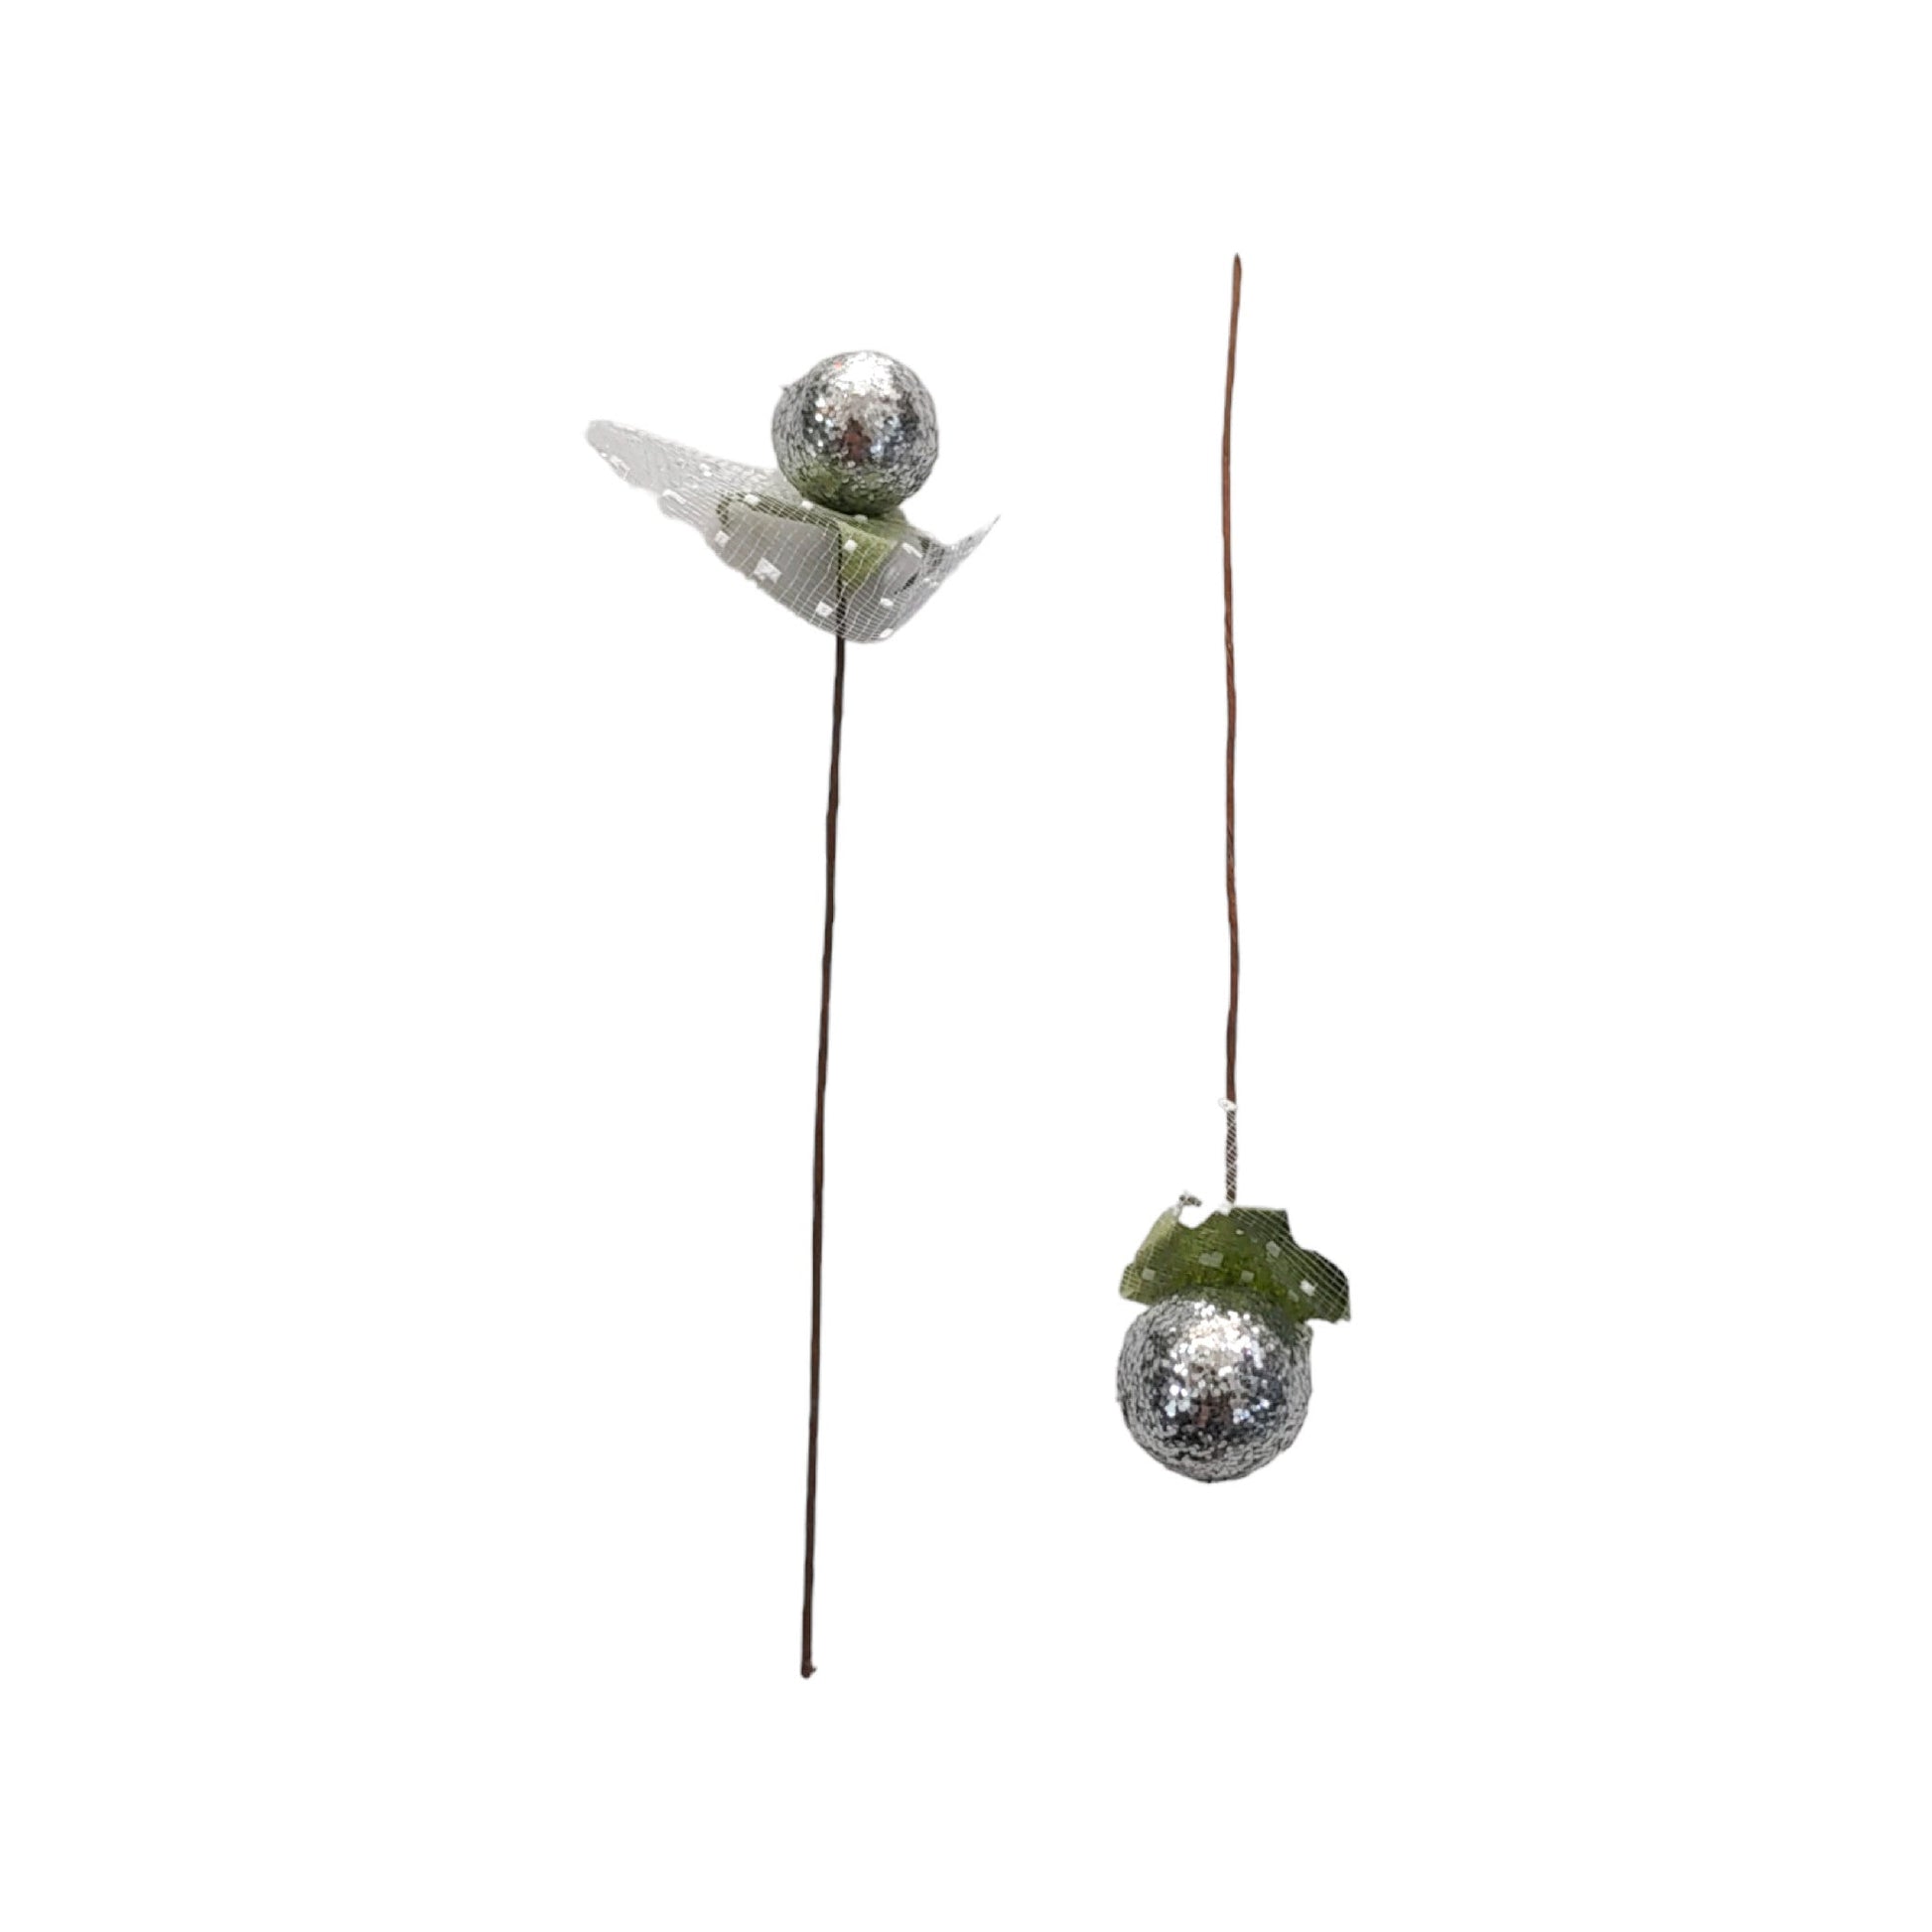 Indian Petals decorative-foam-ball-net-stick-design-139